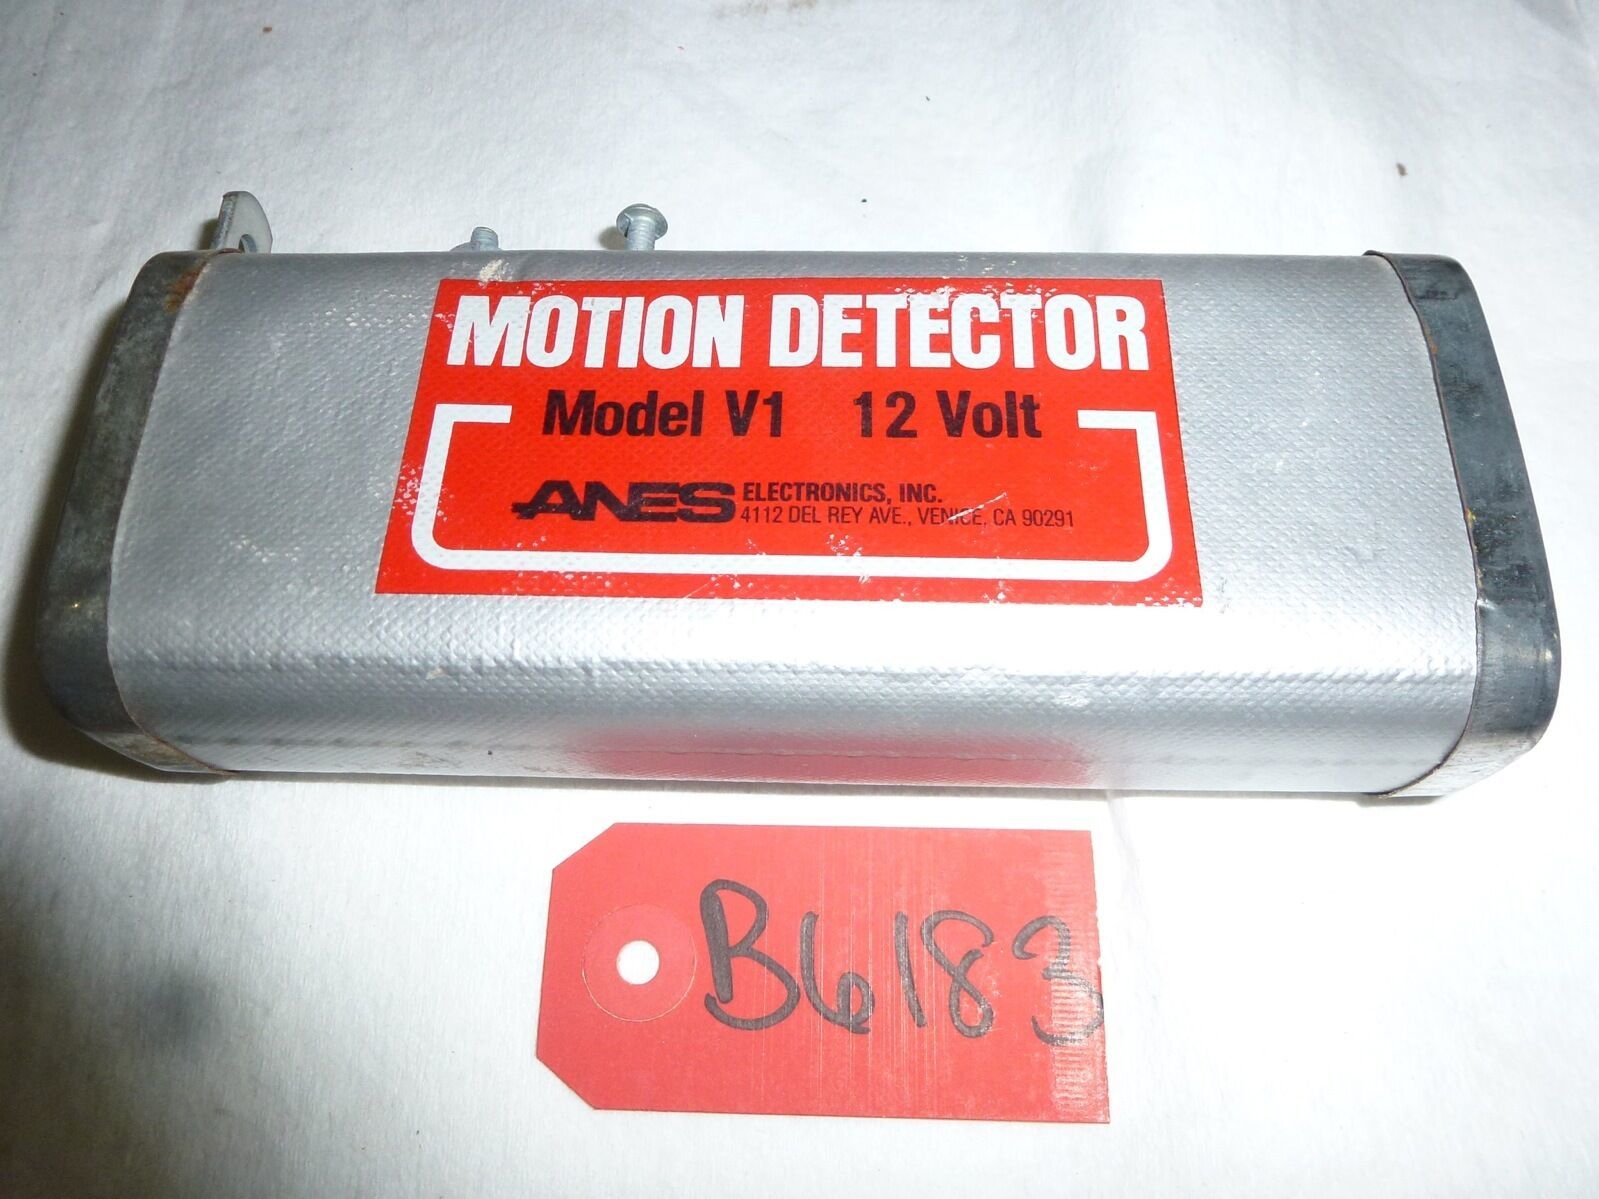 Anes 12V Motion Detector, Model V1 - $92.00